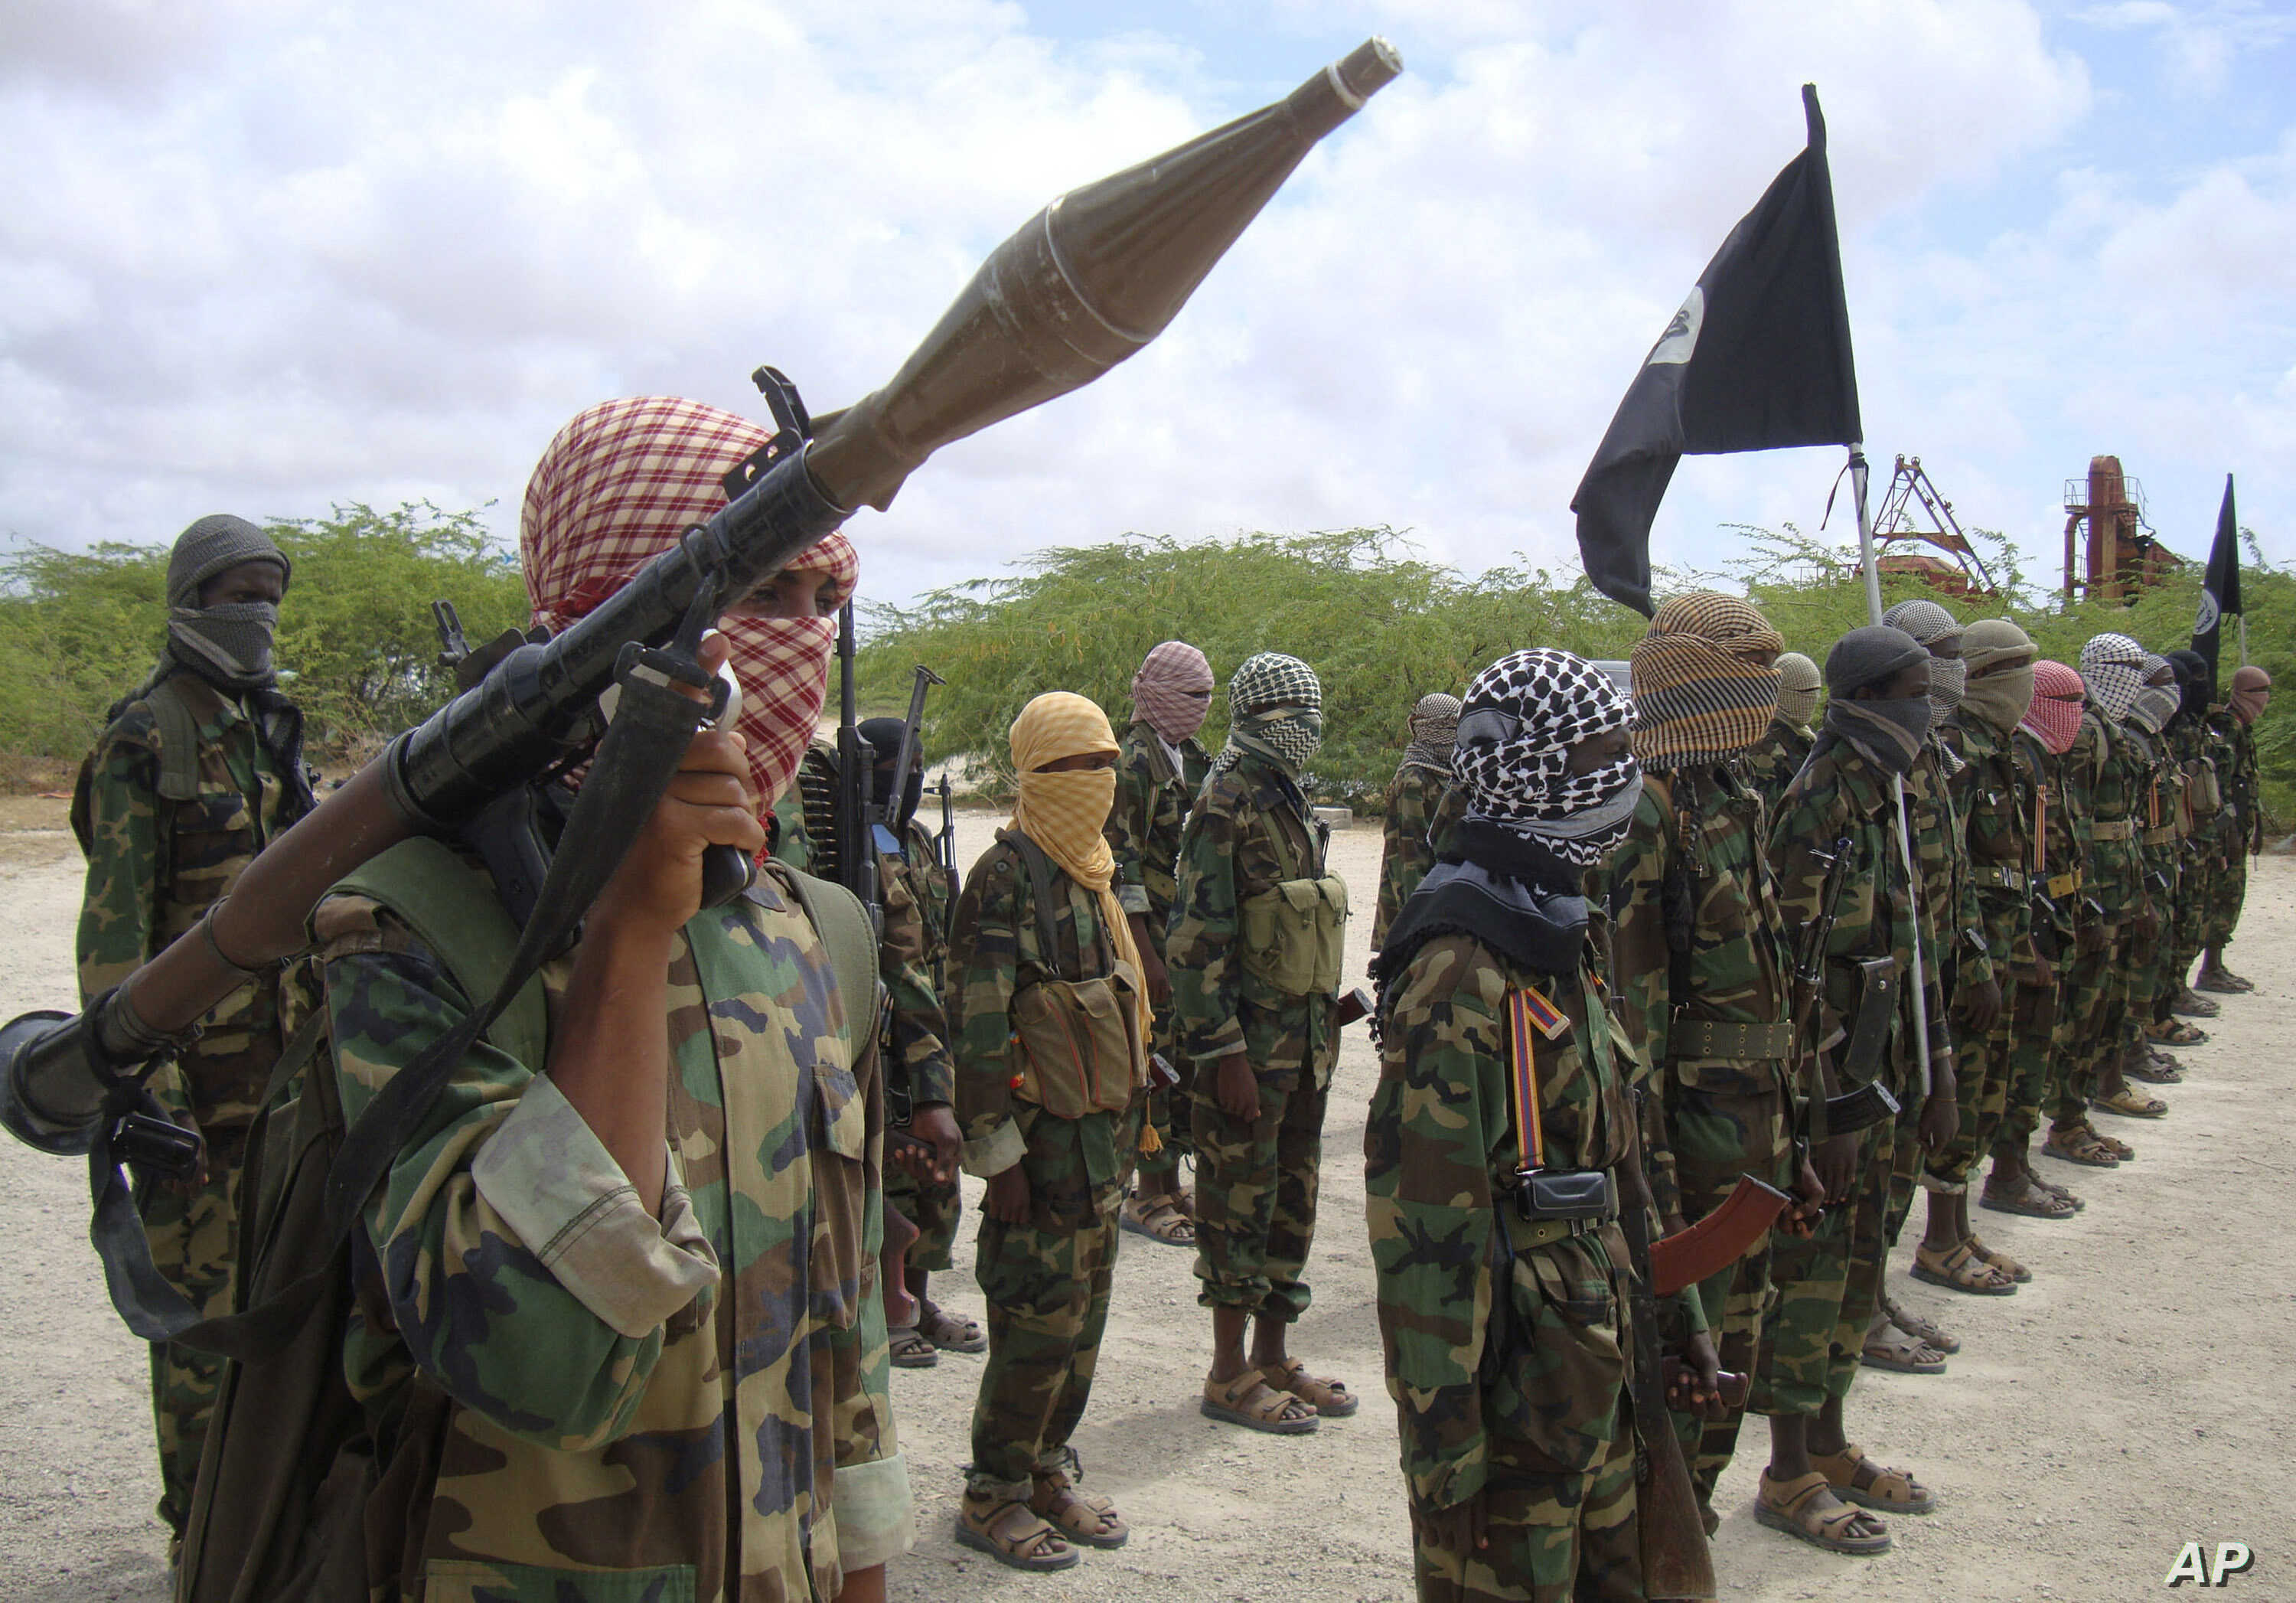 Al-Qaeda eyeing expansion in Africa